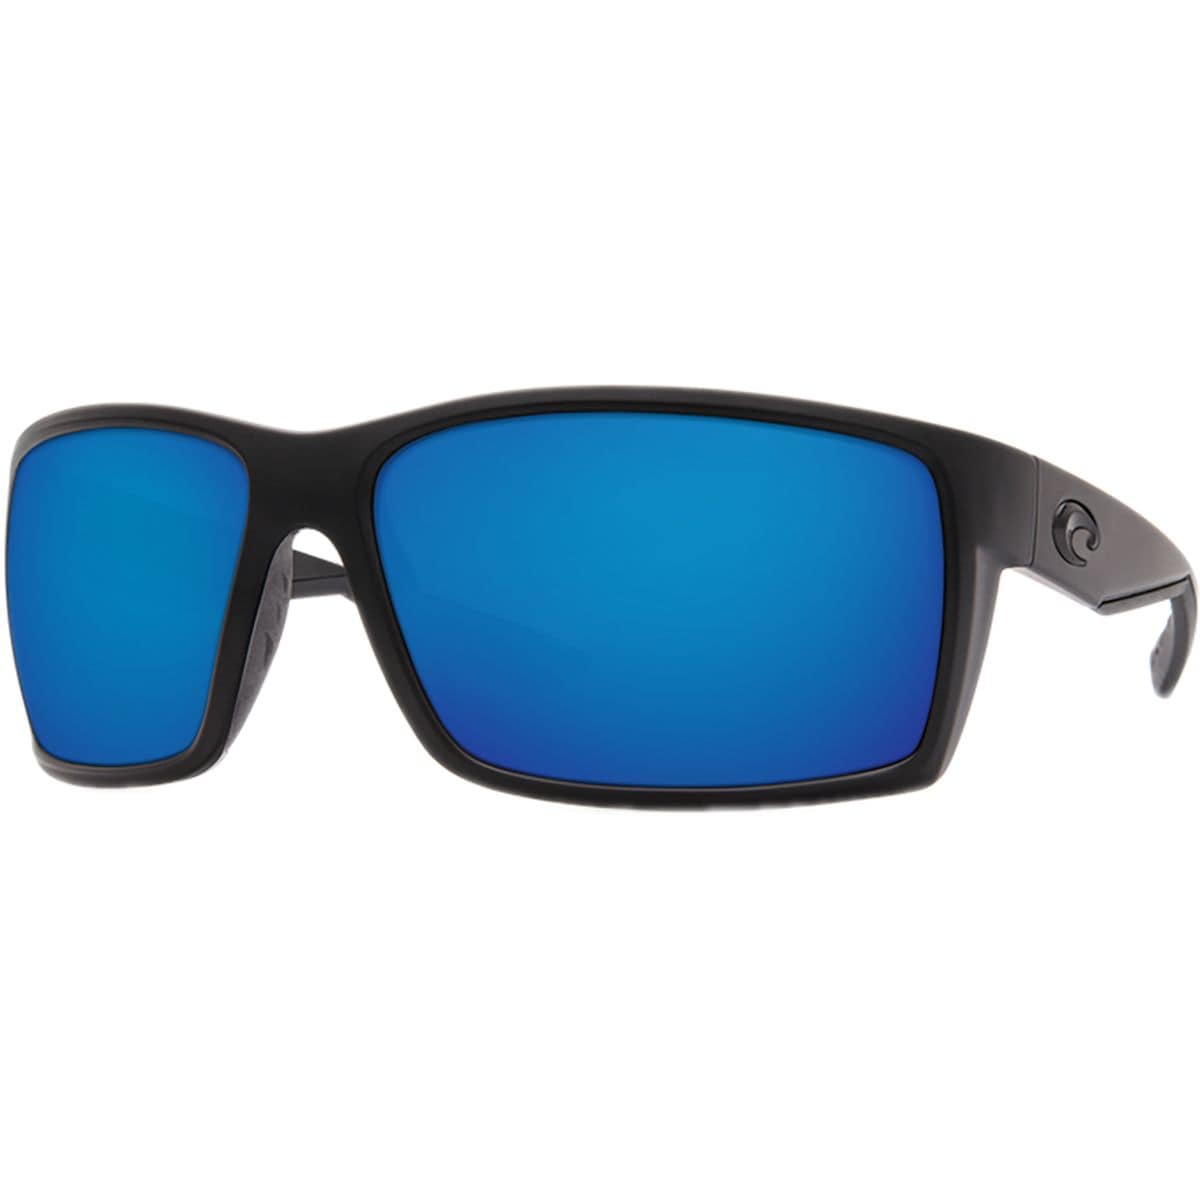 Pre-owned Costa Del Mar Costa Reefton 580p Polarized Sunglasses In Blackout Frame/blue Mirror 580p